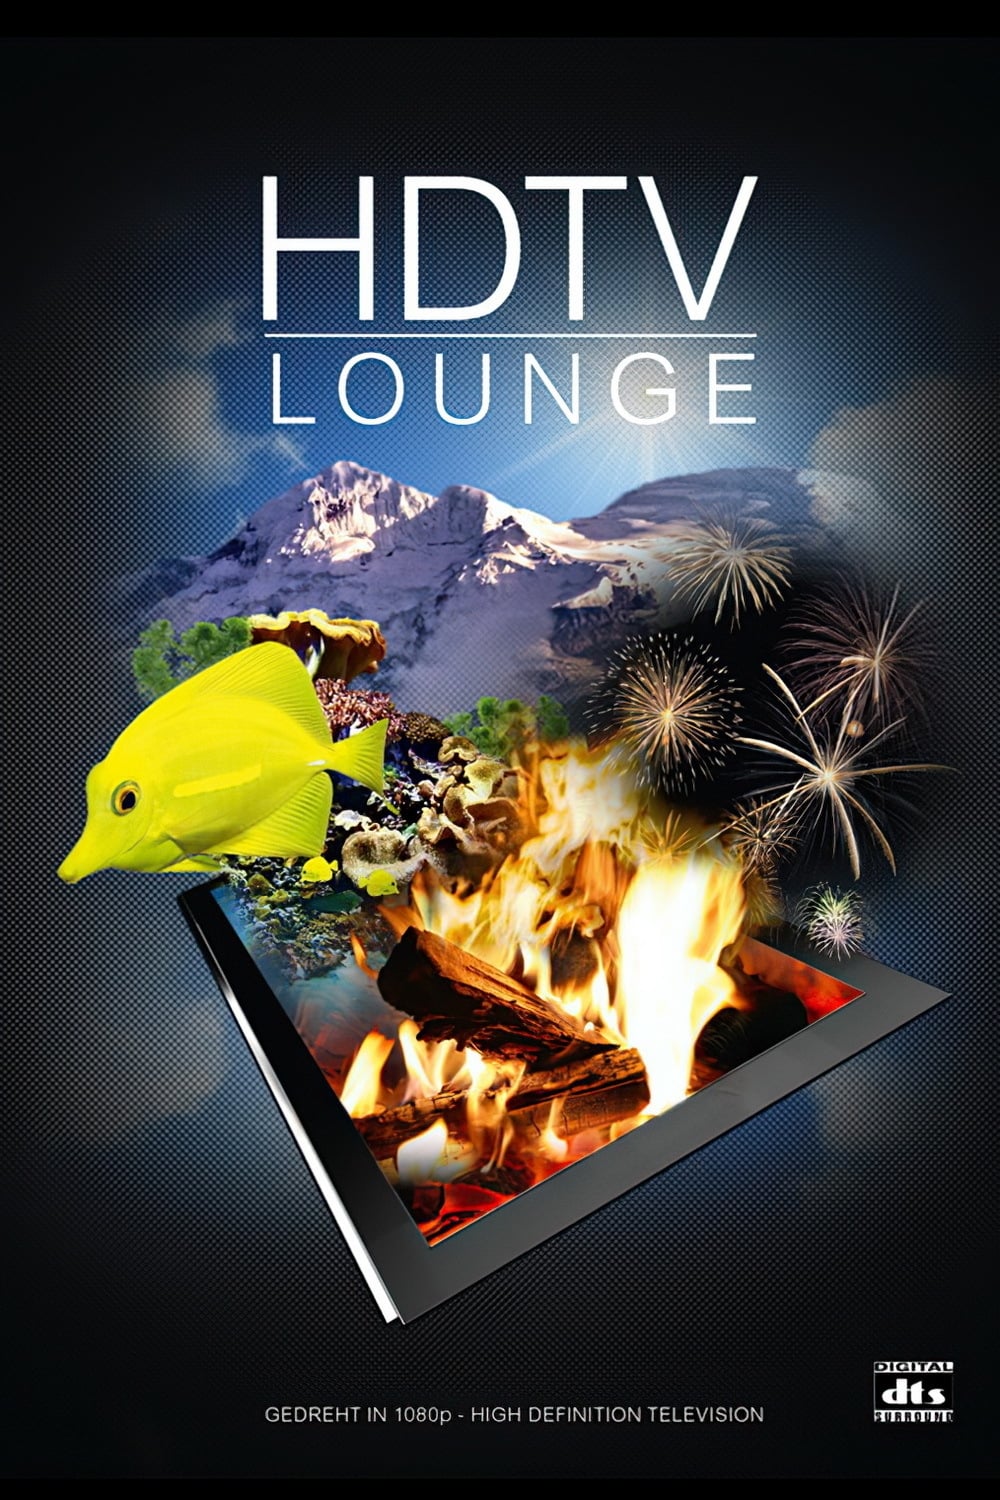 HDTV Lounge